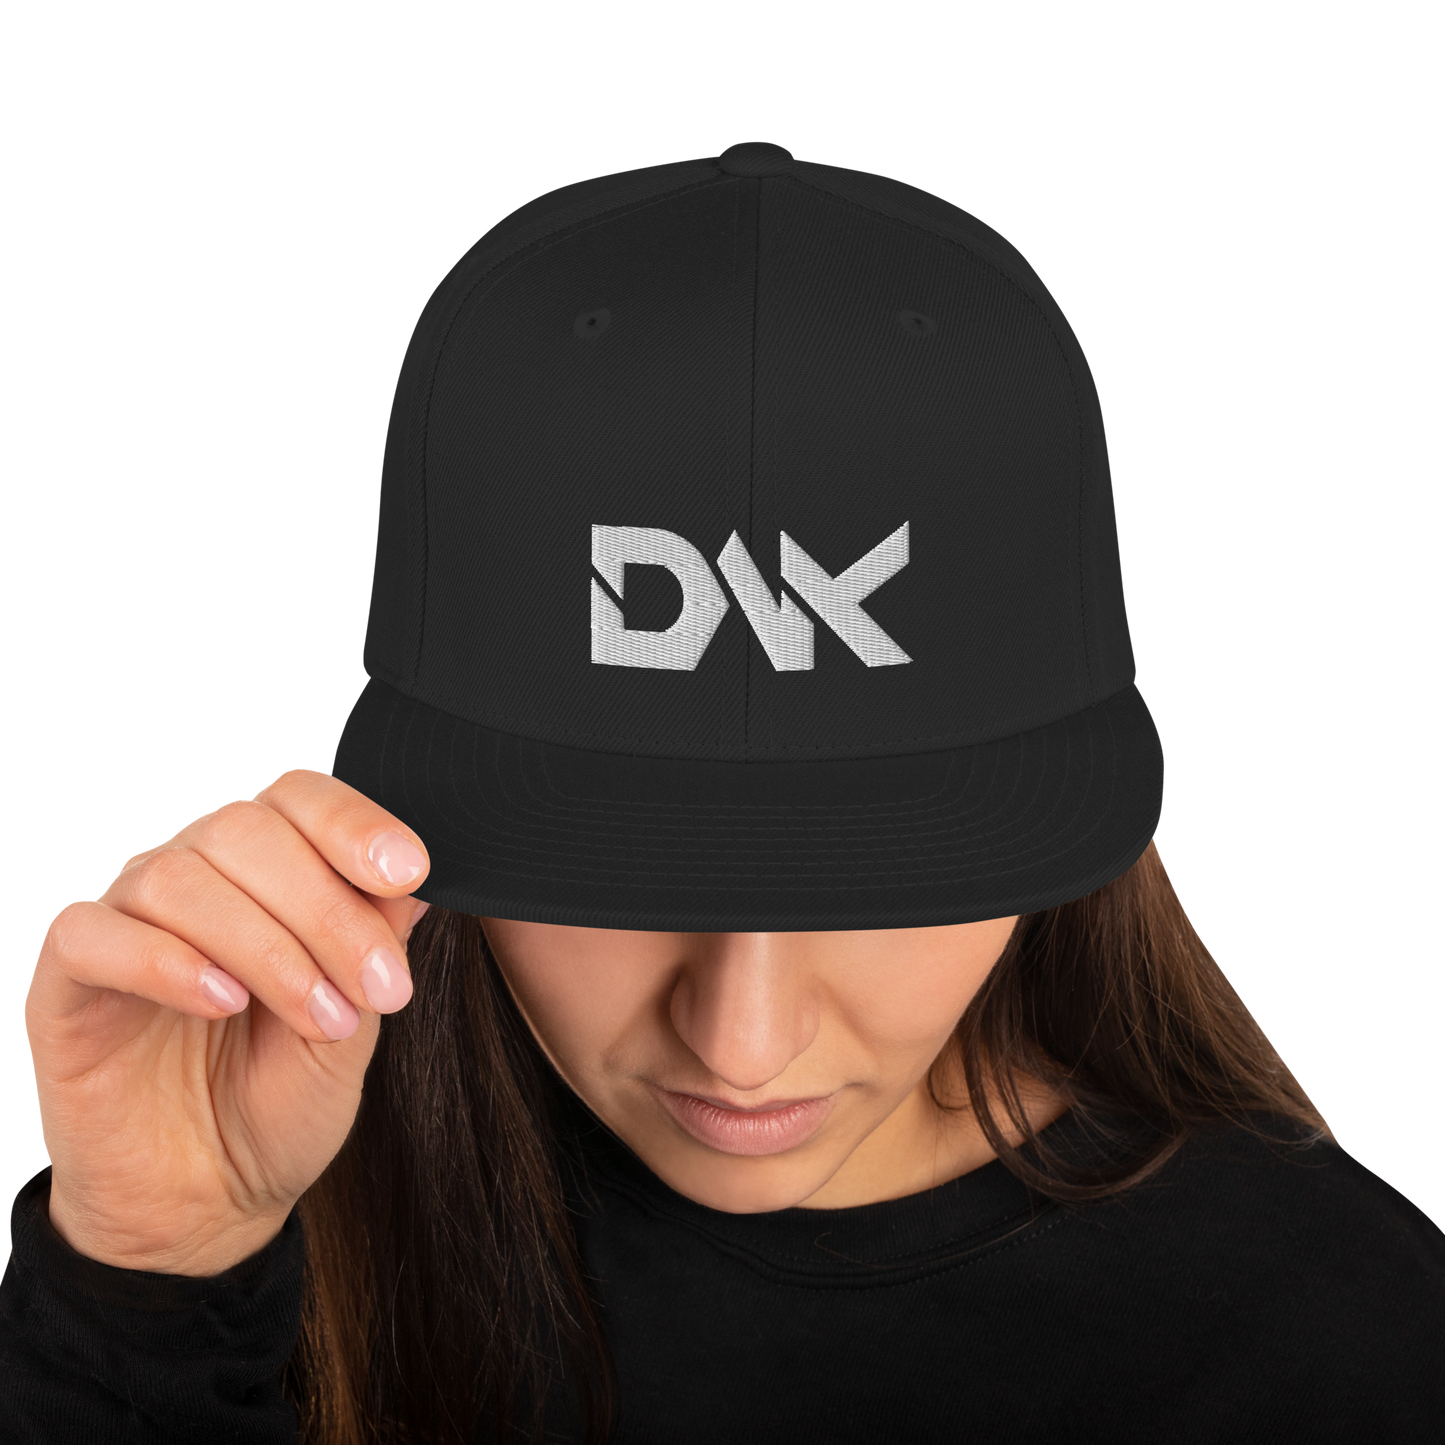 Dak's Snapback Hat